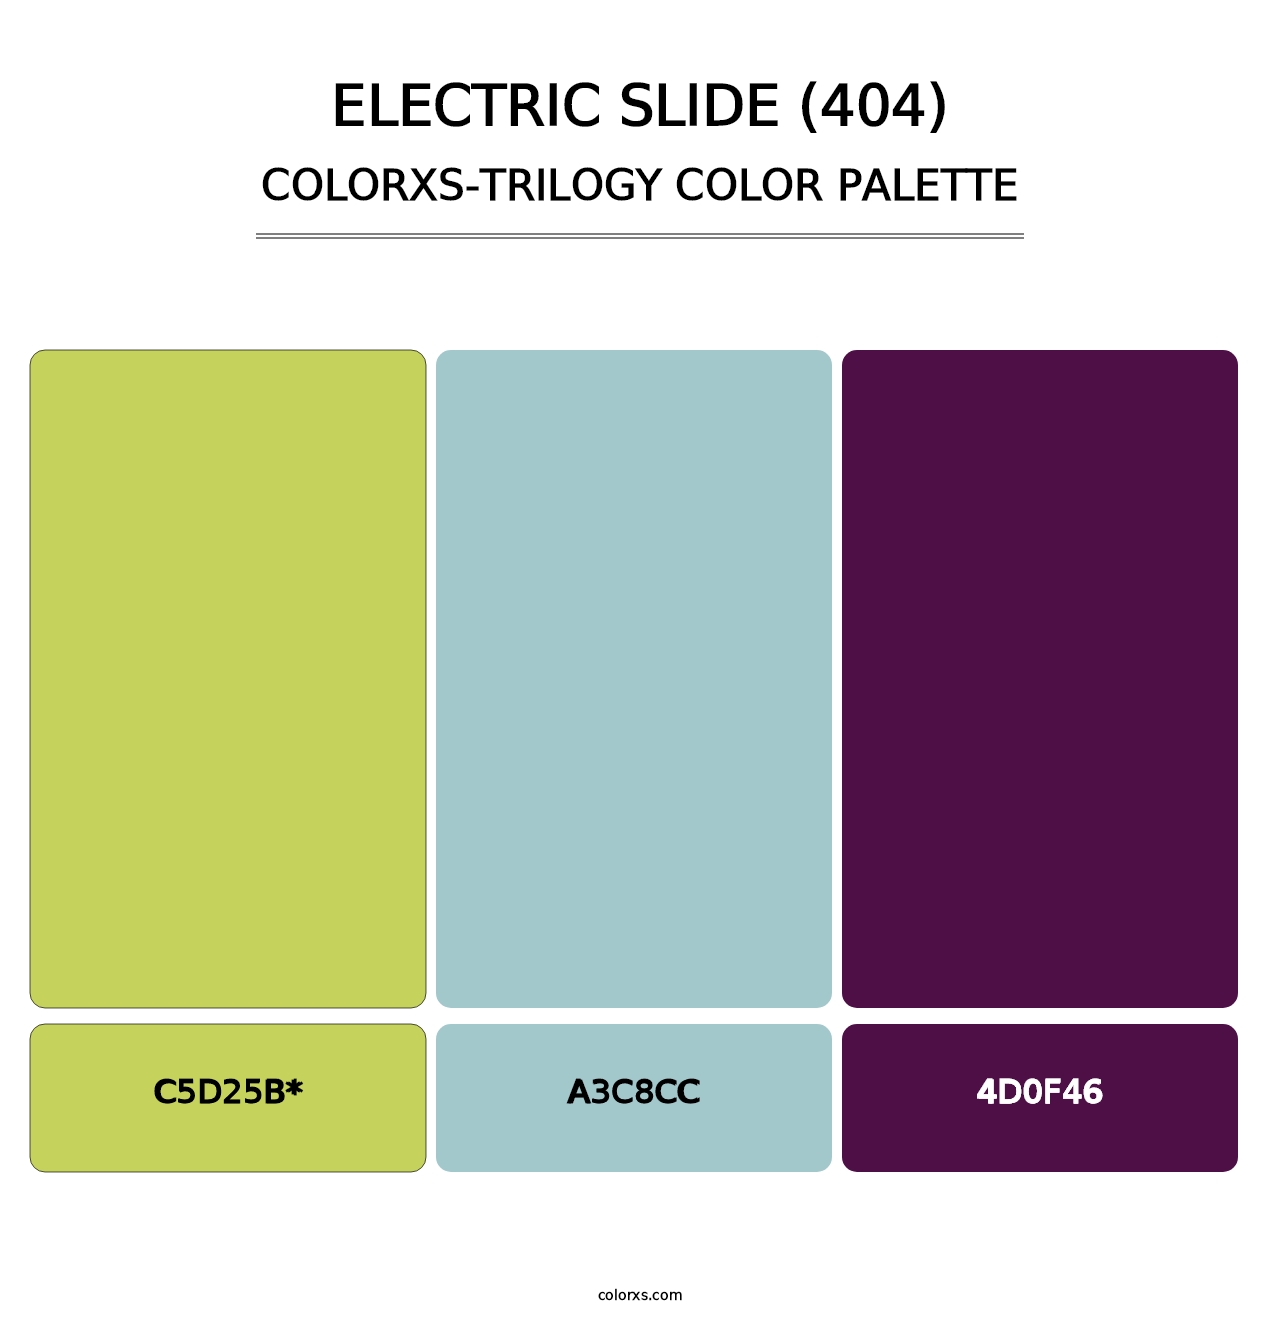 Electric Slide (404) - Colorxs Trilogy Palette